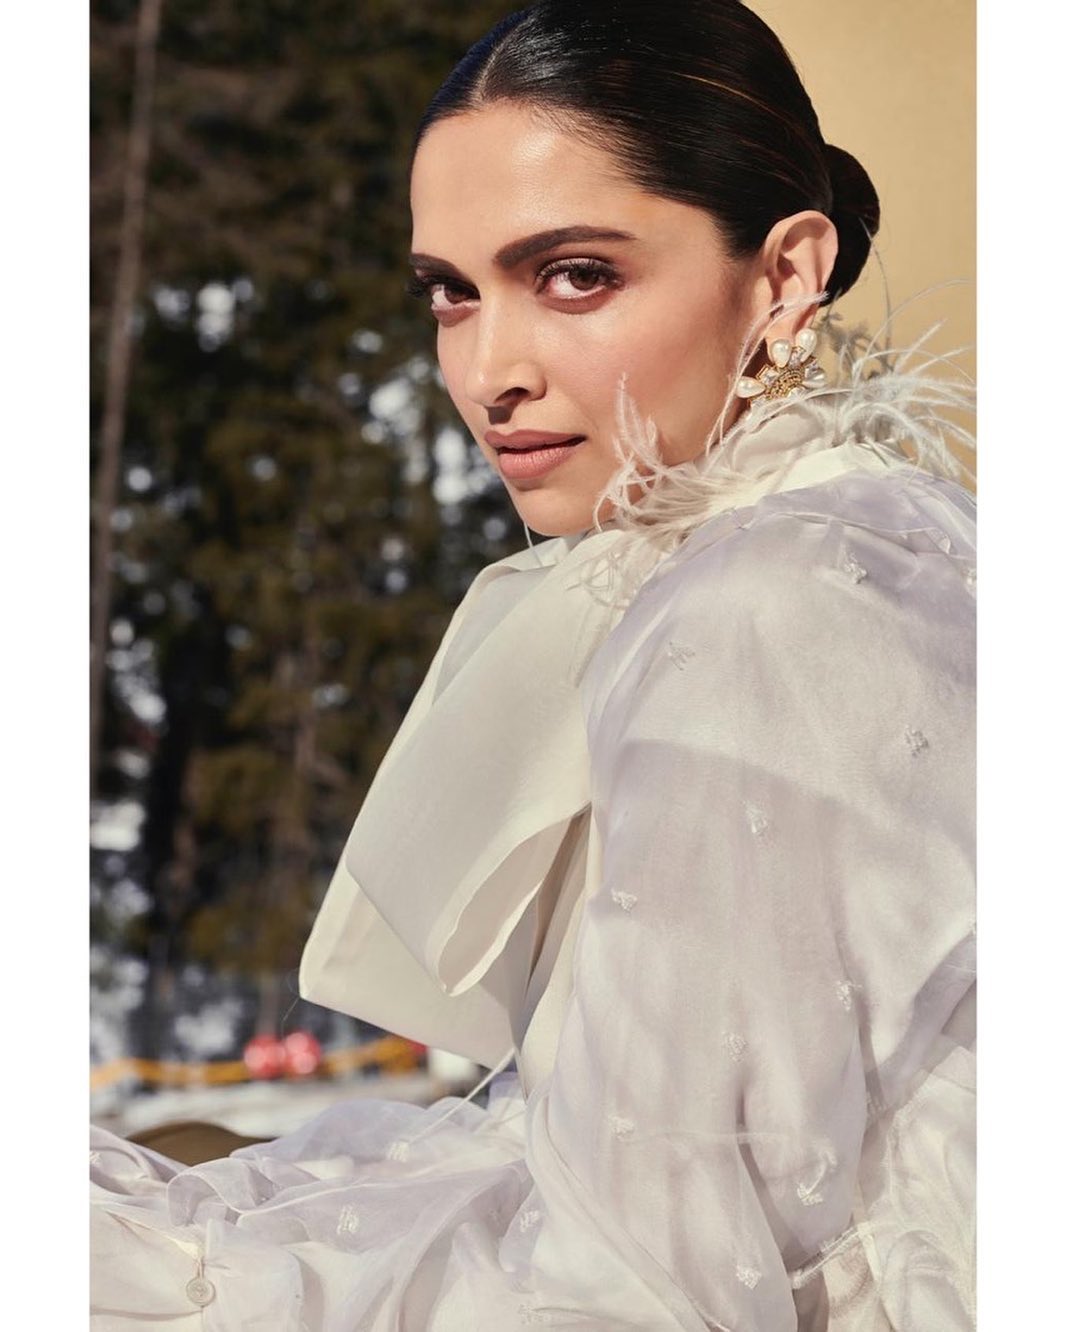 Deepika Padukone for Louis Vuitton's new global campaign